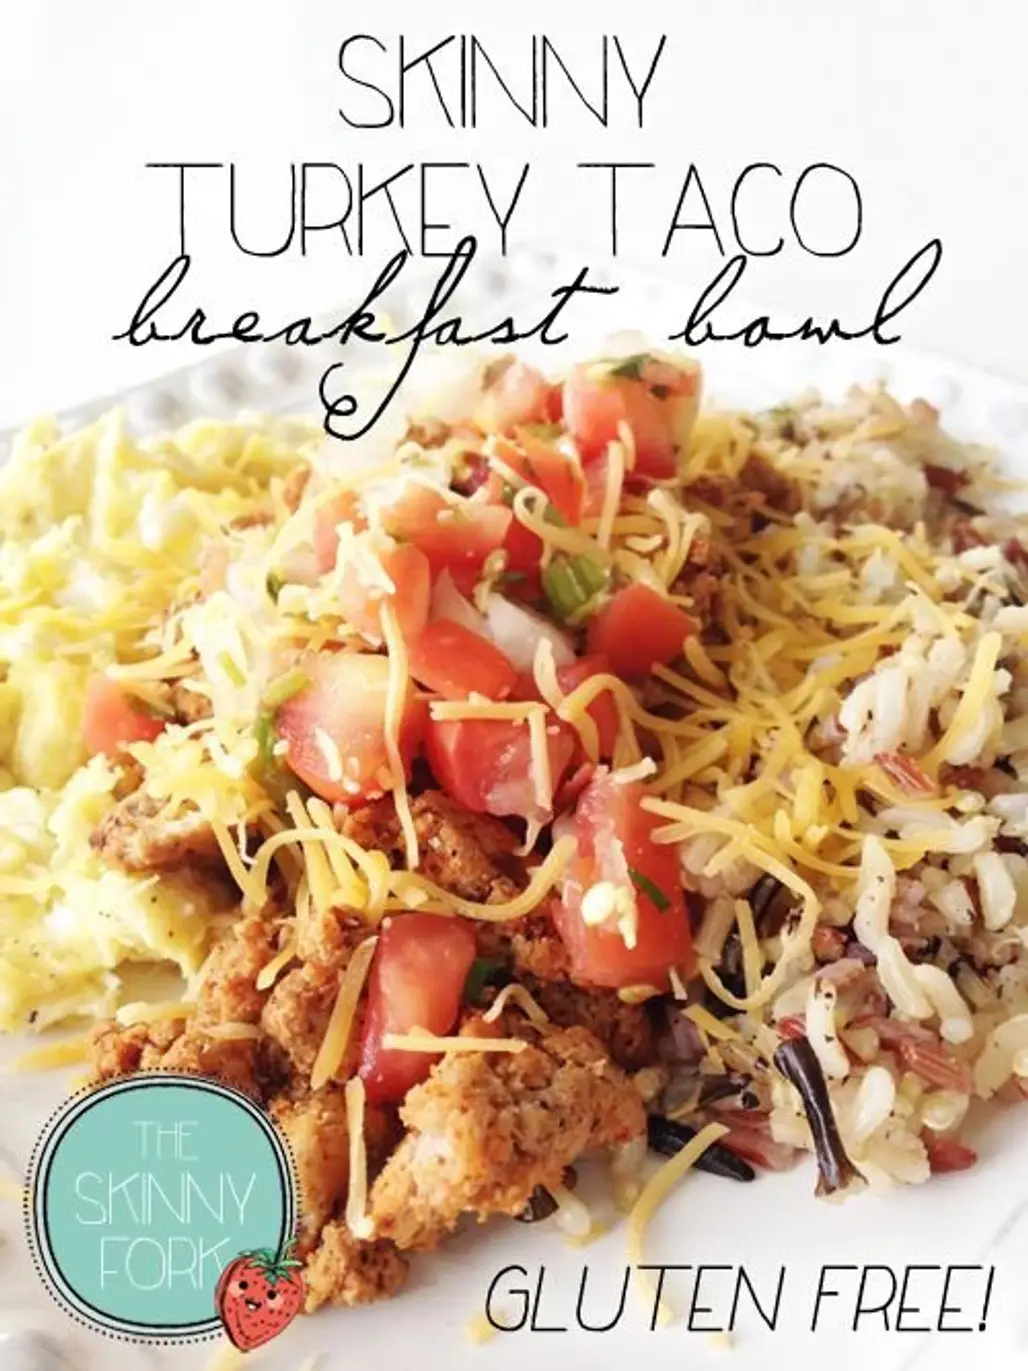 Skinny Turkey Taco Breakfast Bowl